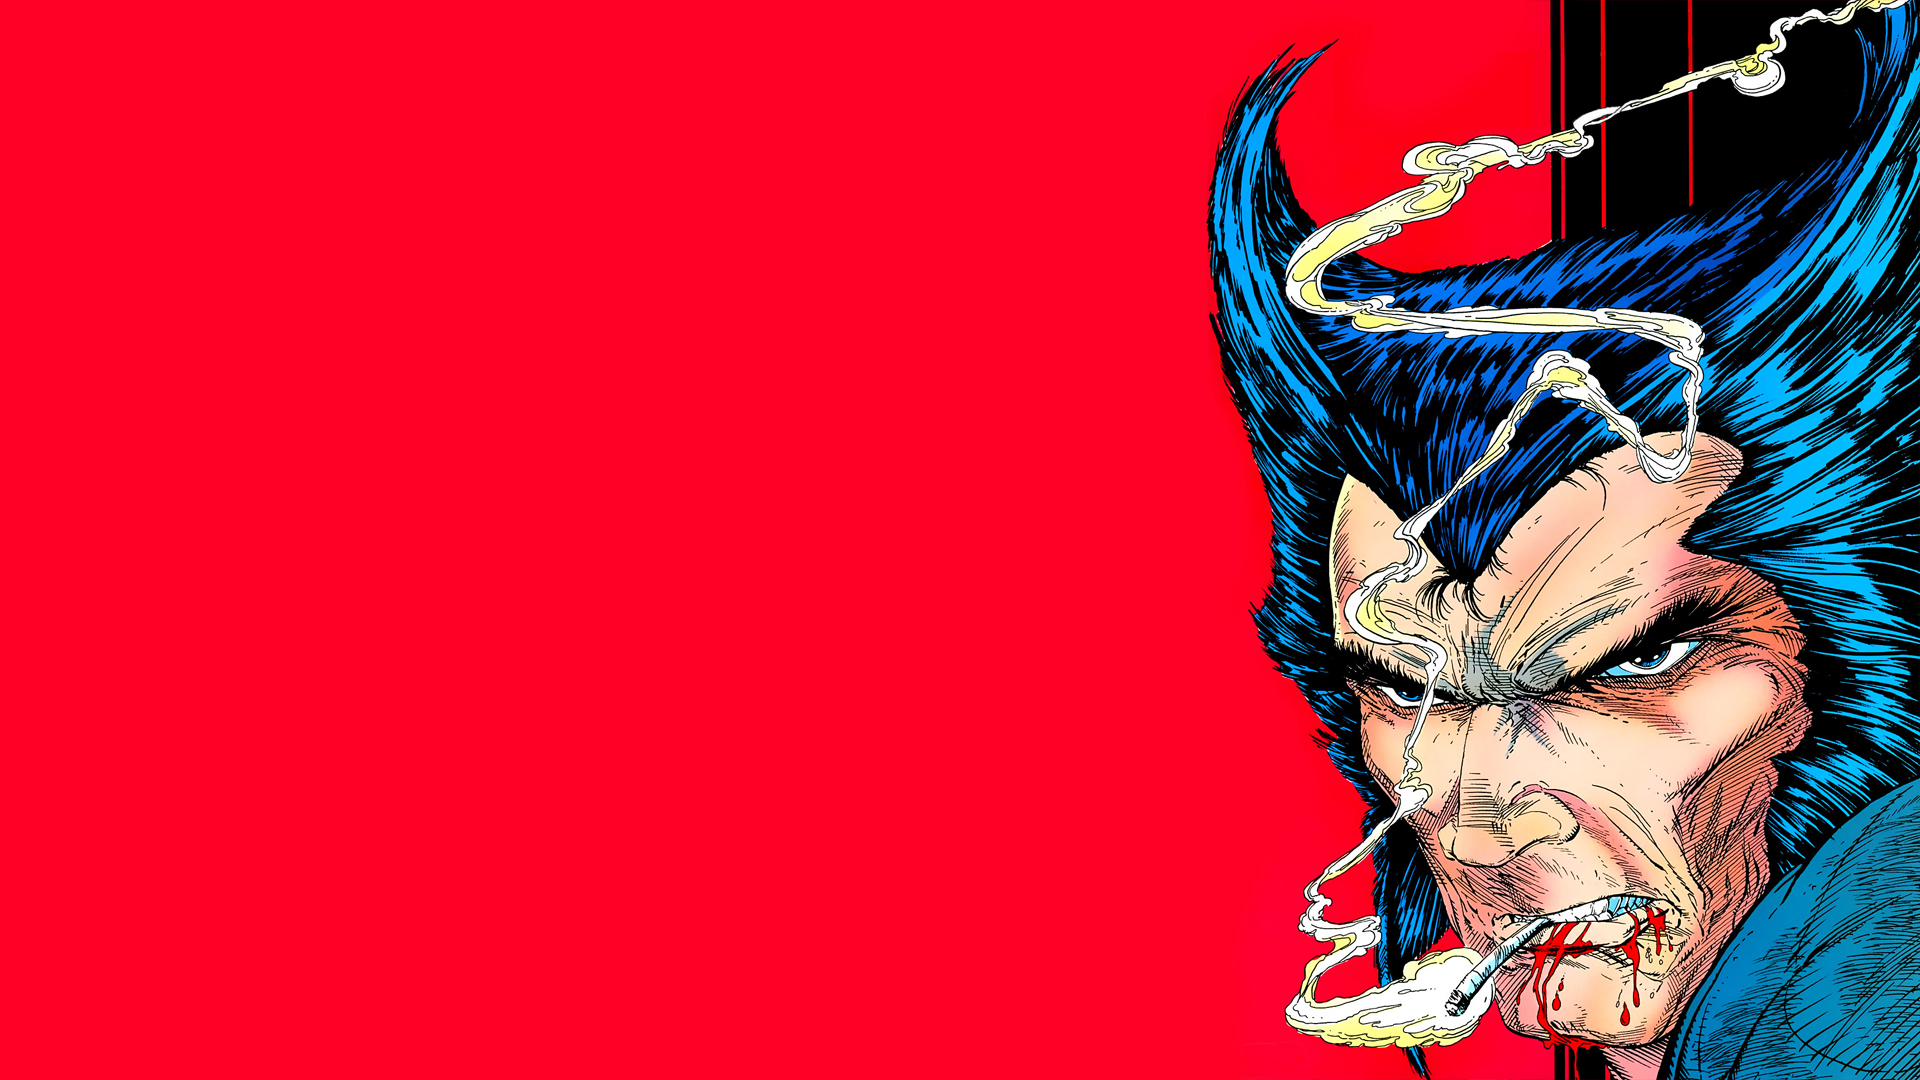 wolverine wallpaper,fictional character,superhero,batman,justice league,illustration